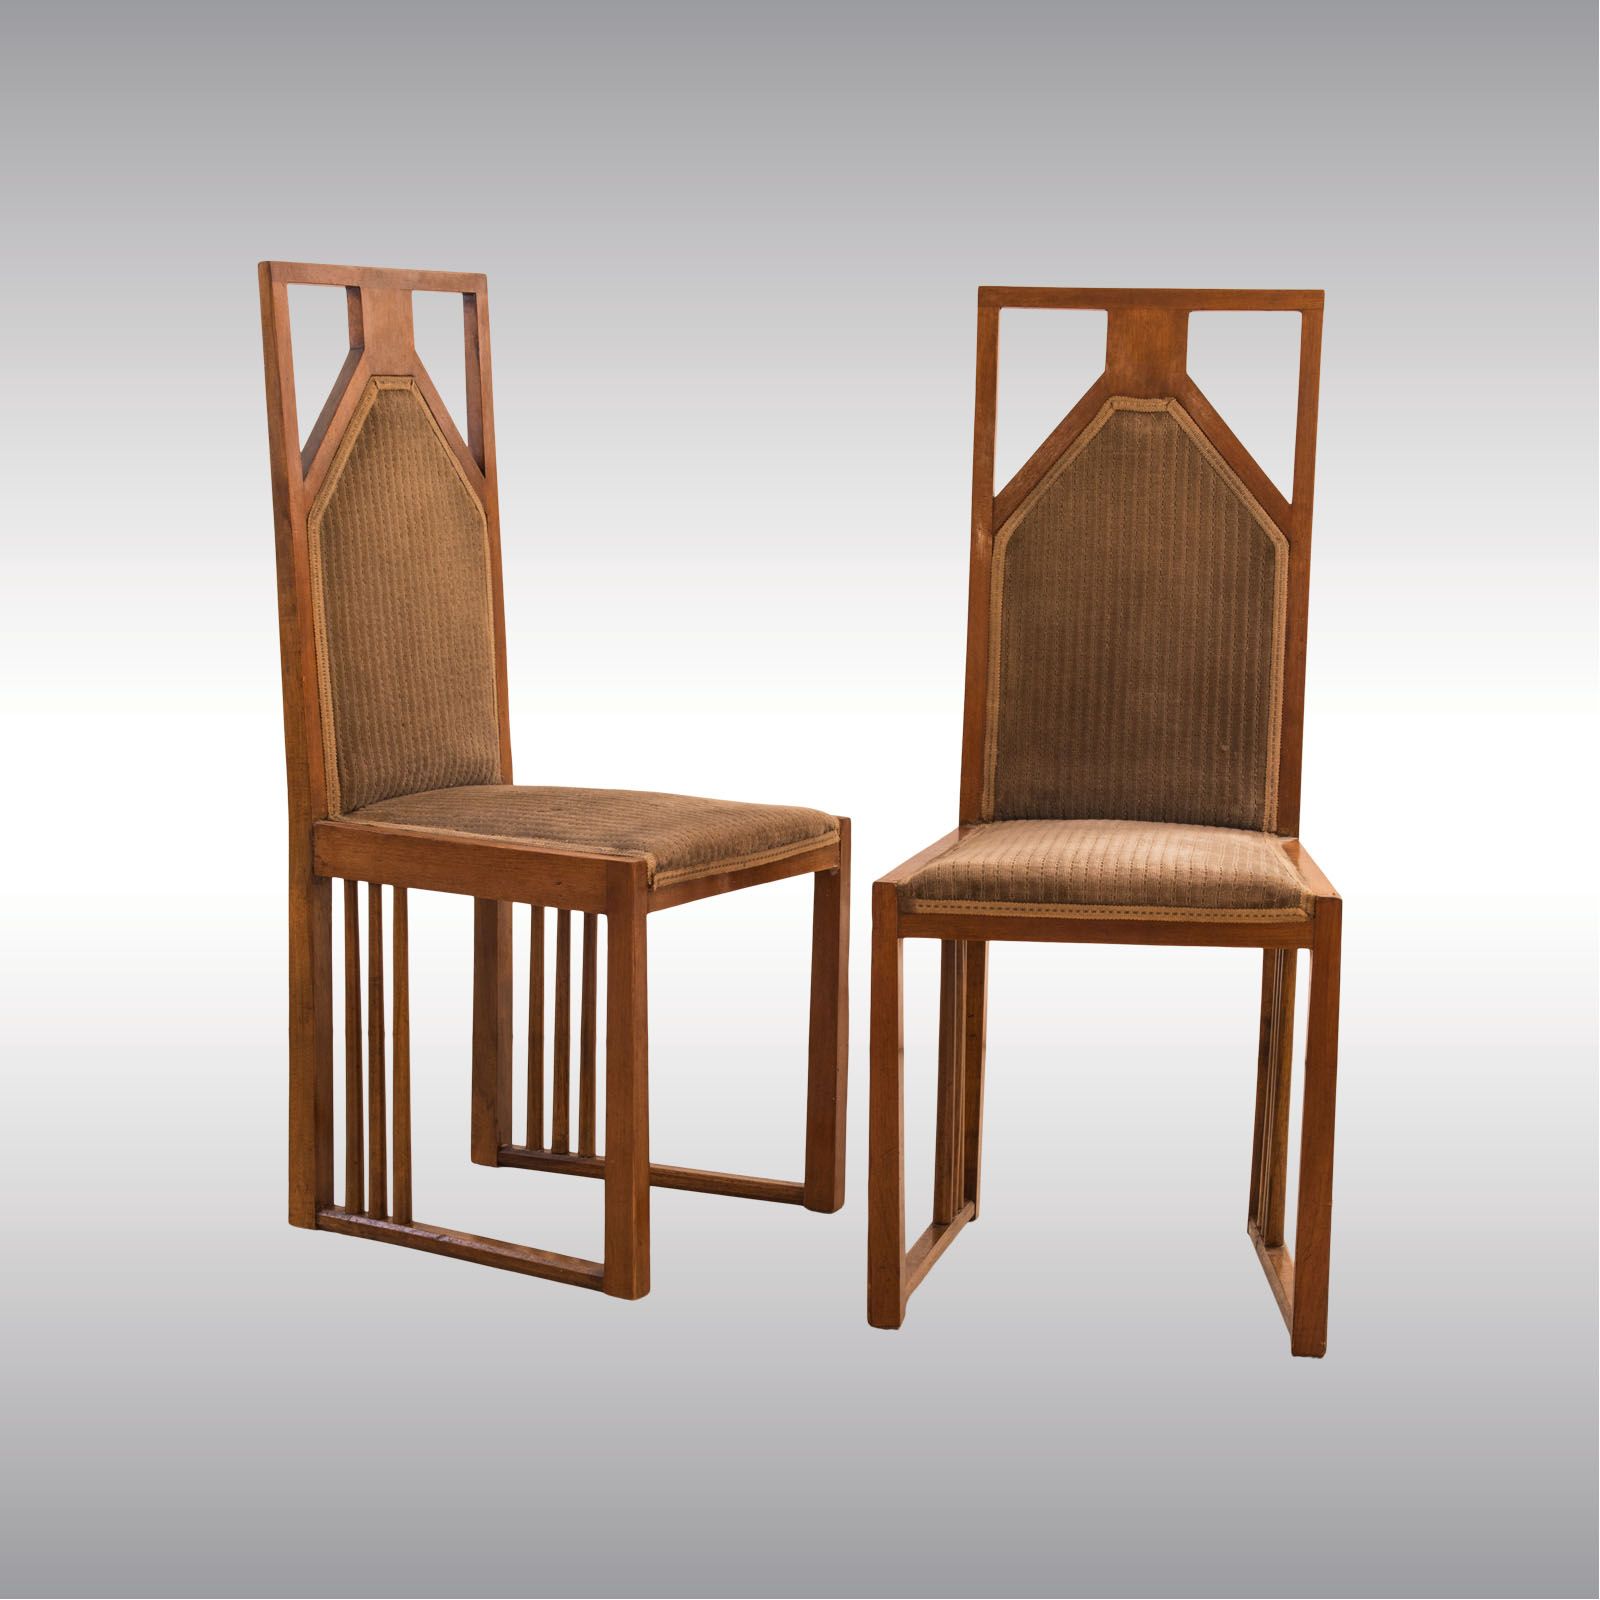 WOKA LAMPS VIENNA - OrderNr.:  80008|Pair of extraordinary chairs 1905-10